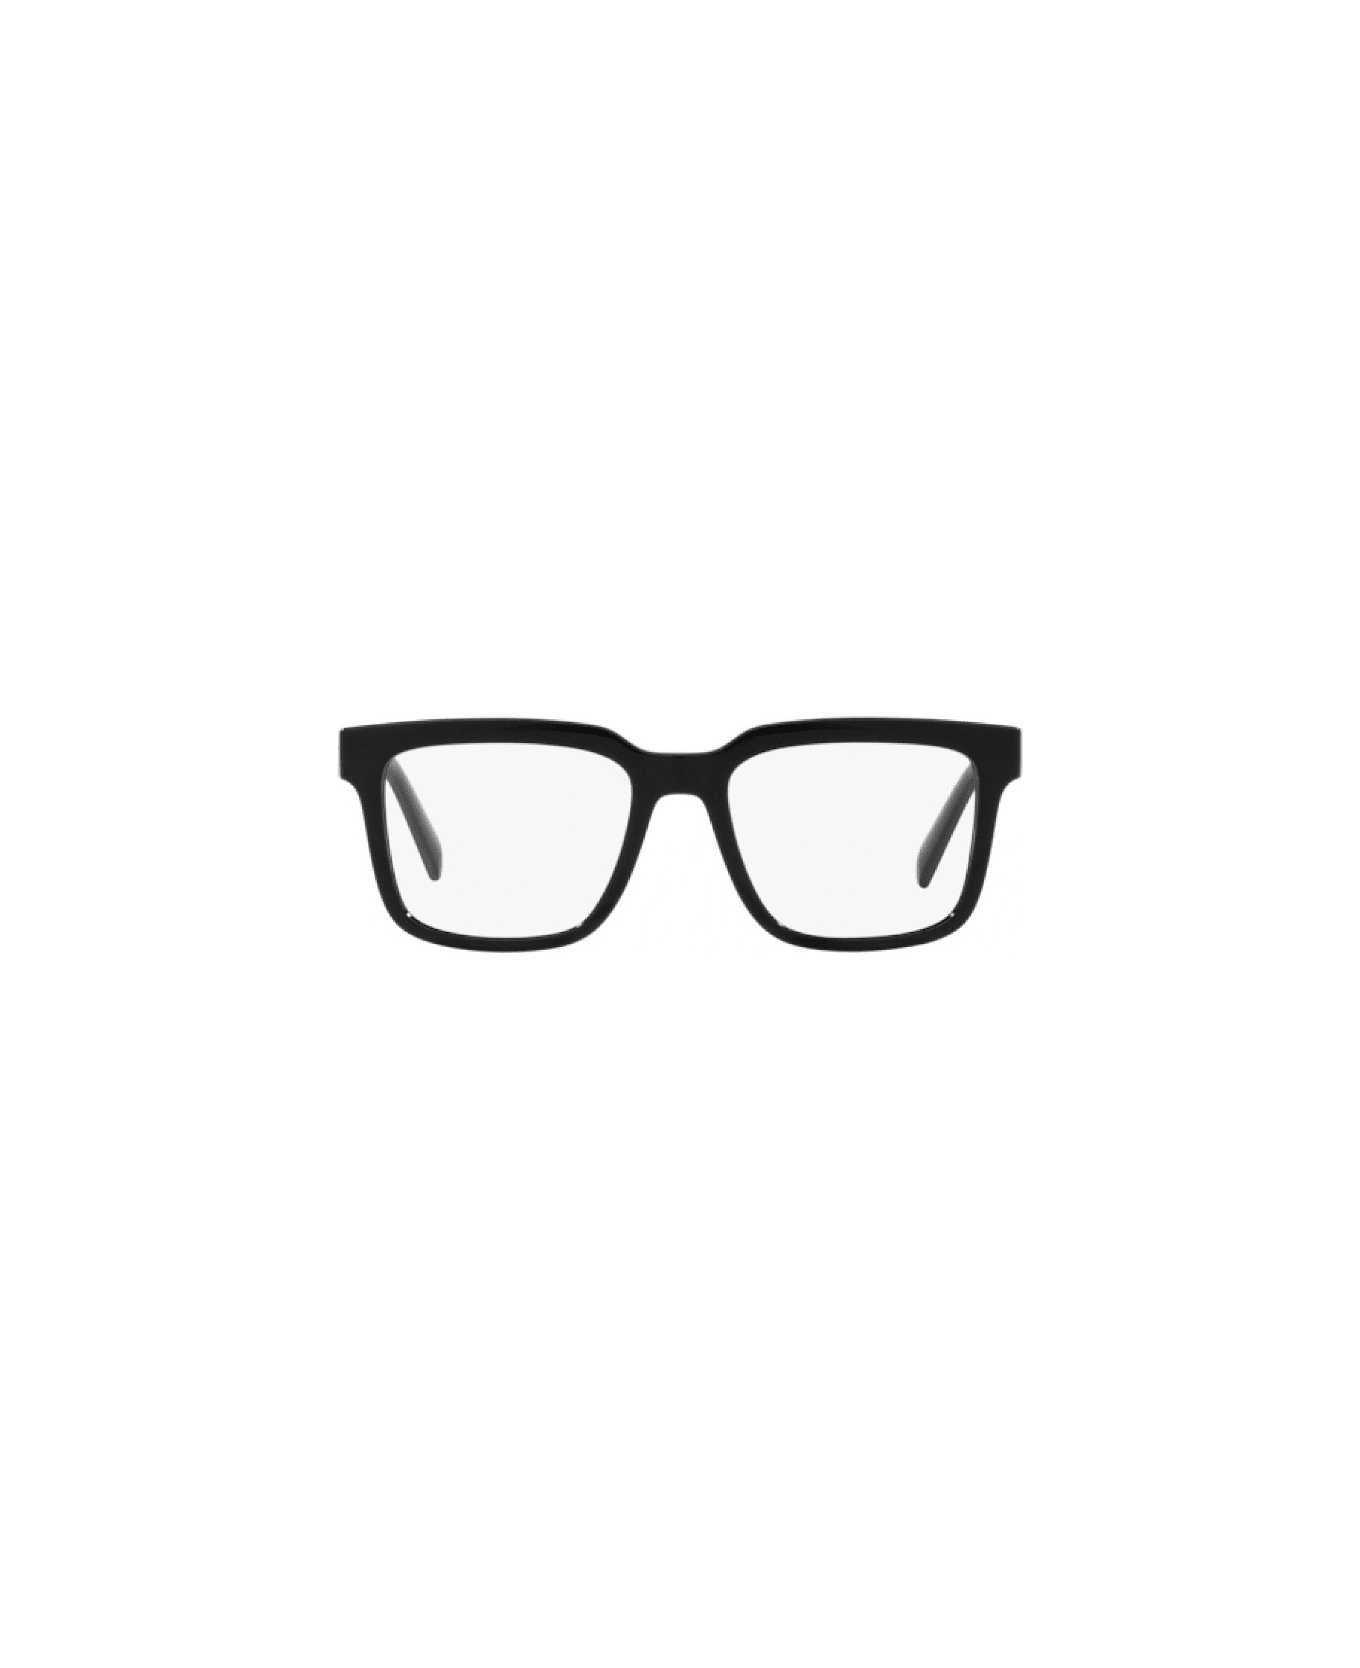 Dolce & Gabbana Eyewear DG5101 Glasses - Trasparente e nero